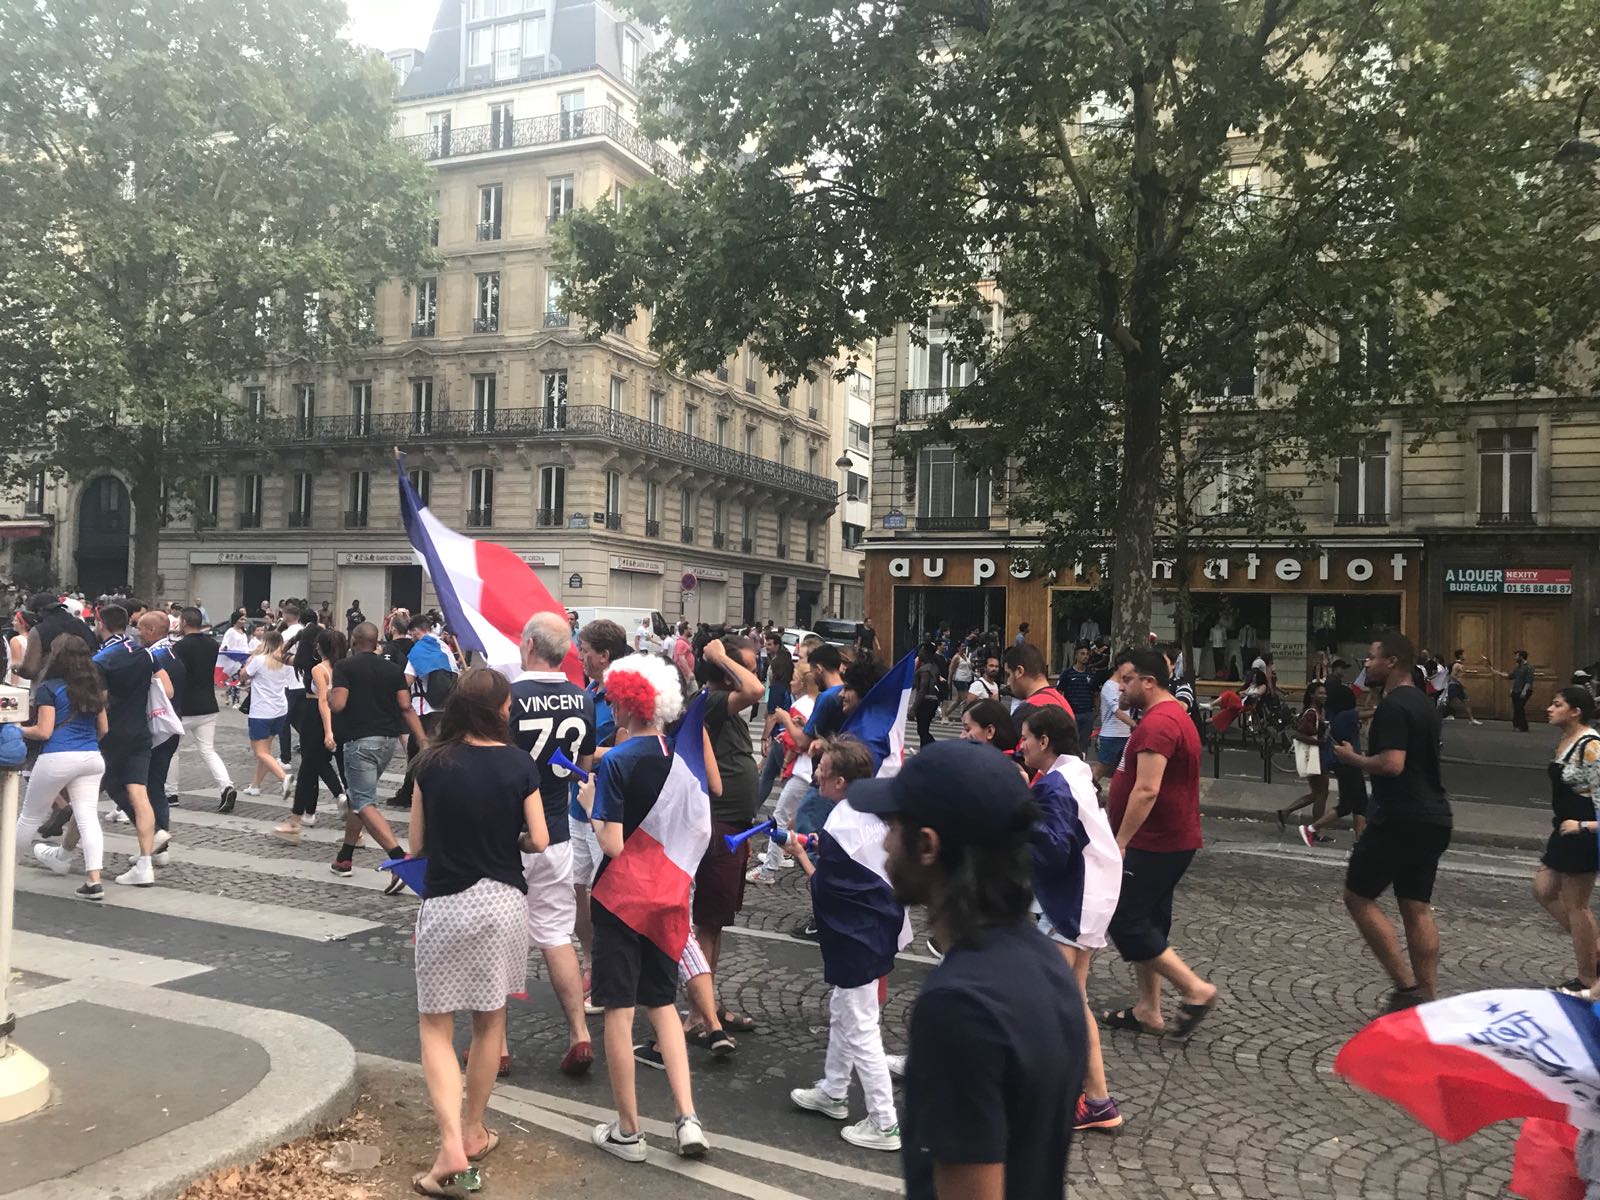 French fans pouring into Paris' Champs-Elysees Avenue